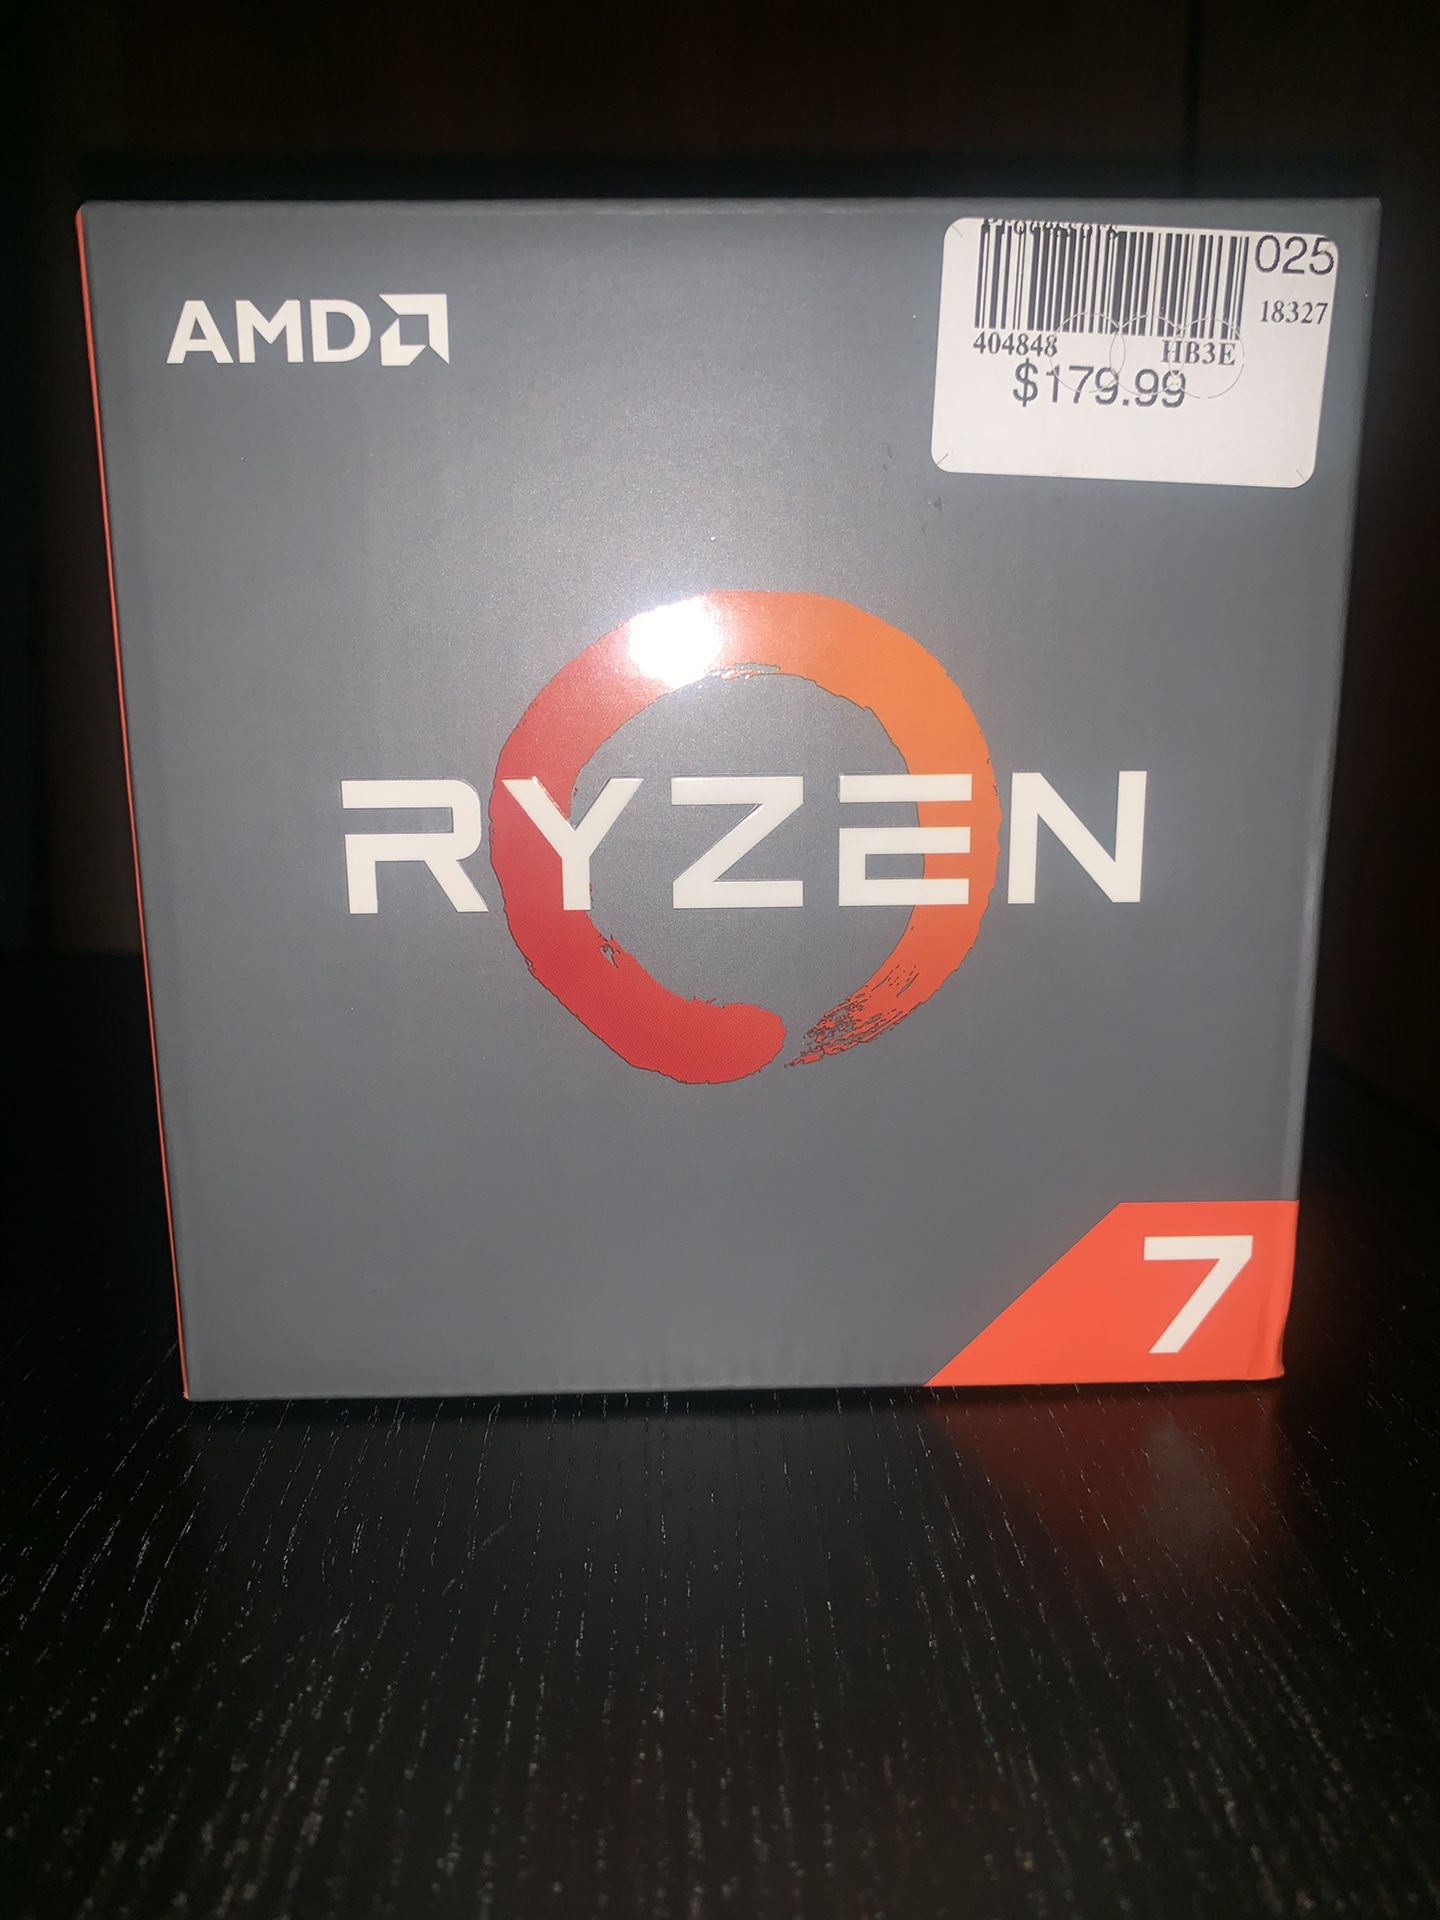 AMD Ryzen 7 1700x and Rog Strix B450-F Gaming Motherboard